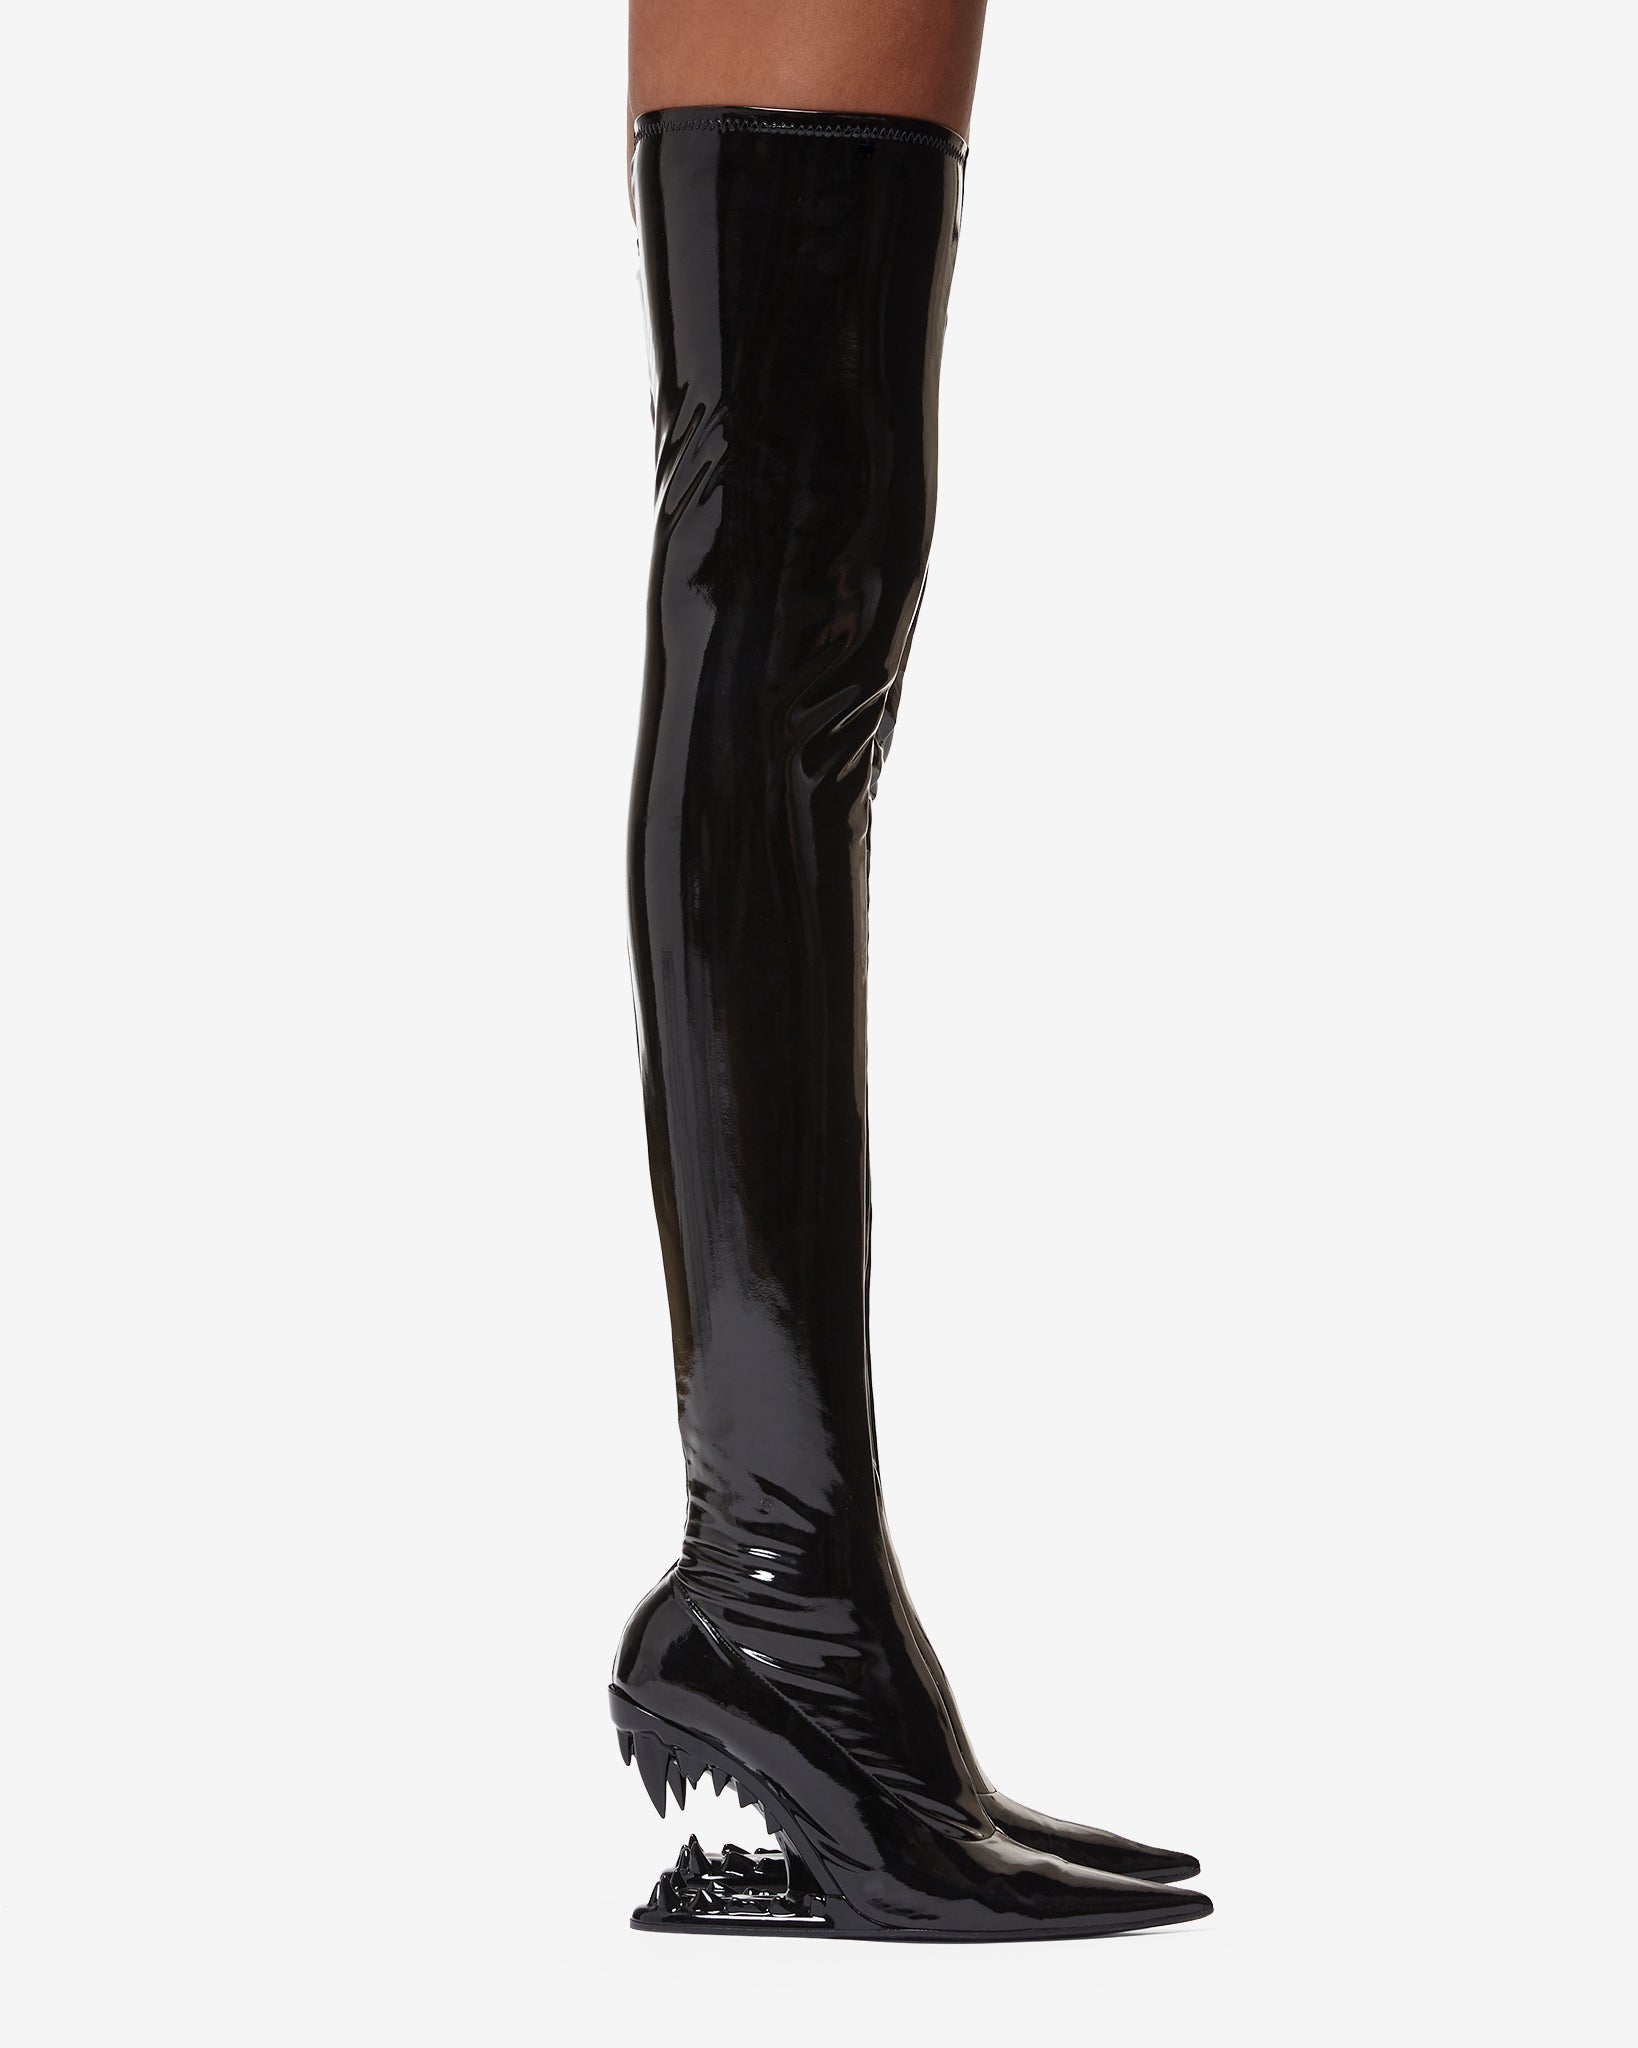 Morso Vynil Boots : Women Boots Black/Silver | GCDS®